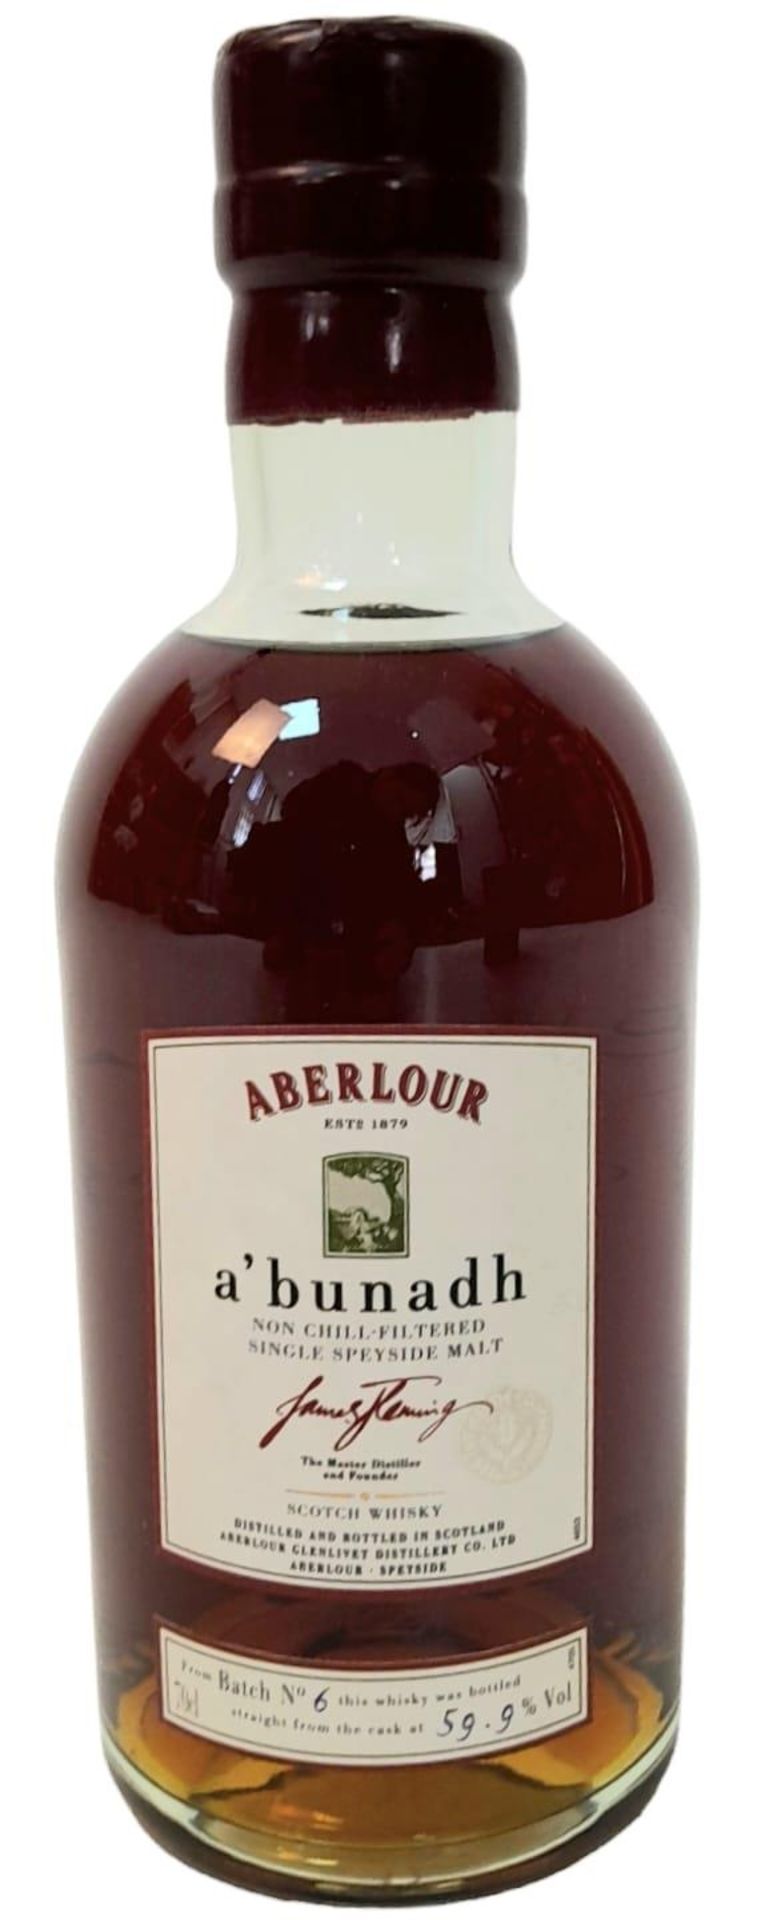 A Rare Bottle of Aberlour a'bunadh Batch No.6 Single Speyside Malt Scotch Whisky. 70cl. - Image 2 of 5